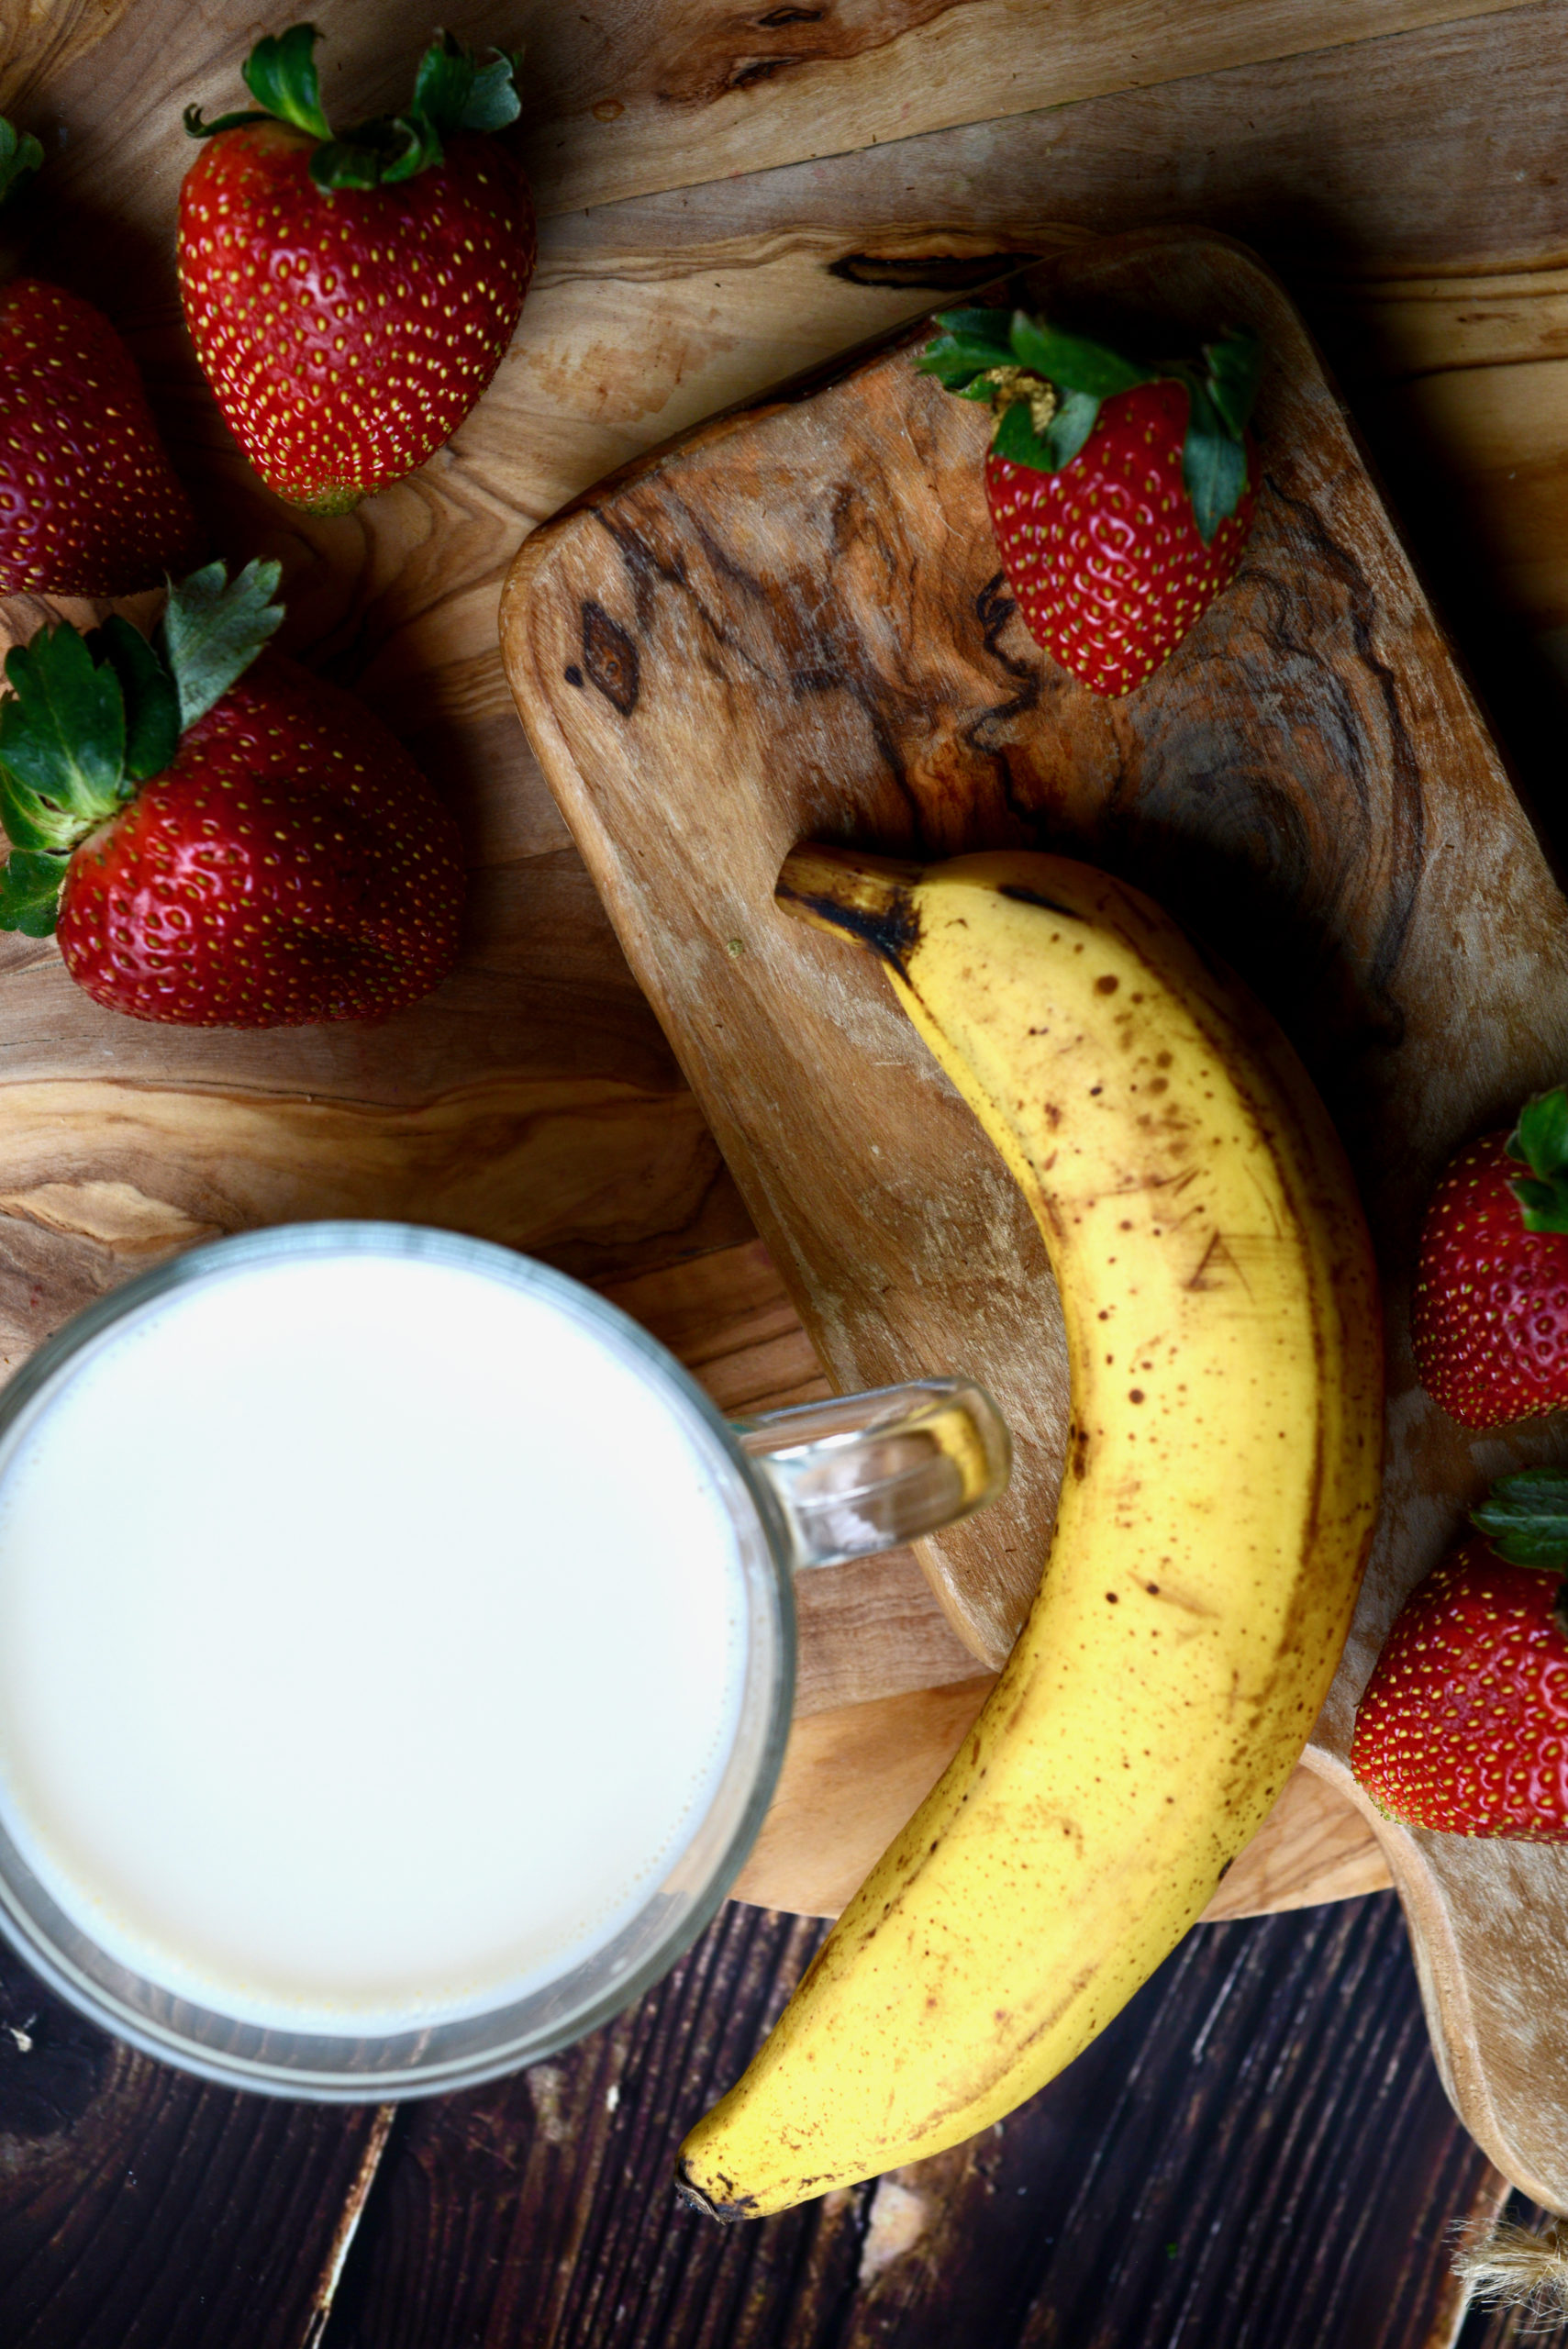 3-ingredient strawberry banana smoothie areal shot of ingredients - banana, strawberries, and non-dairy milk